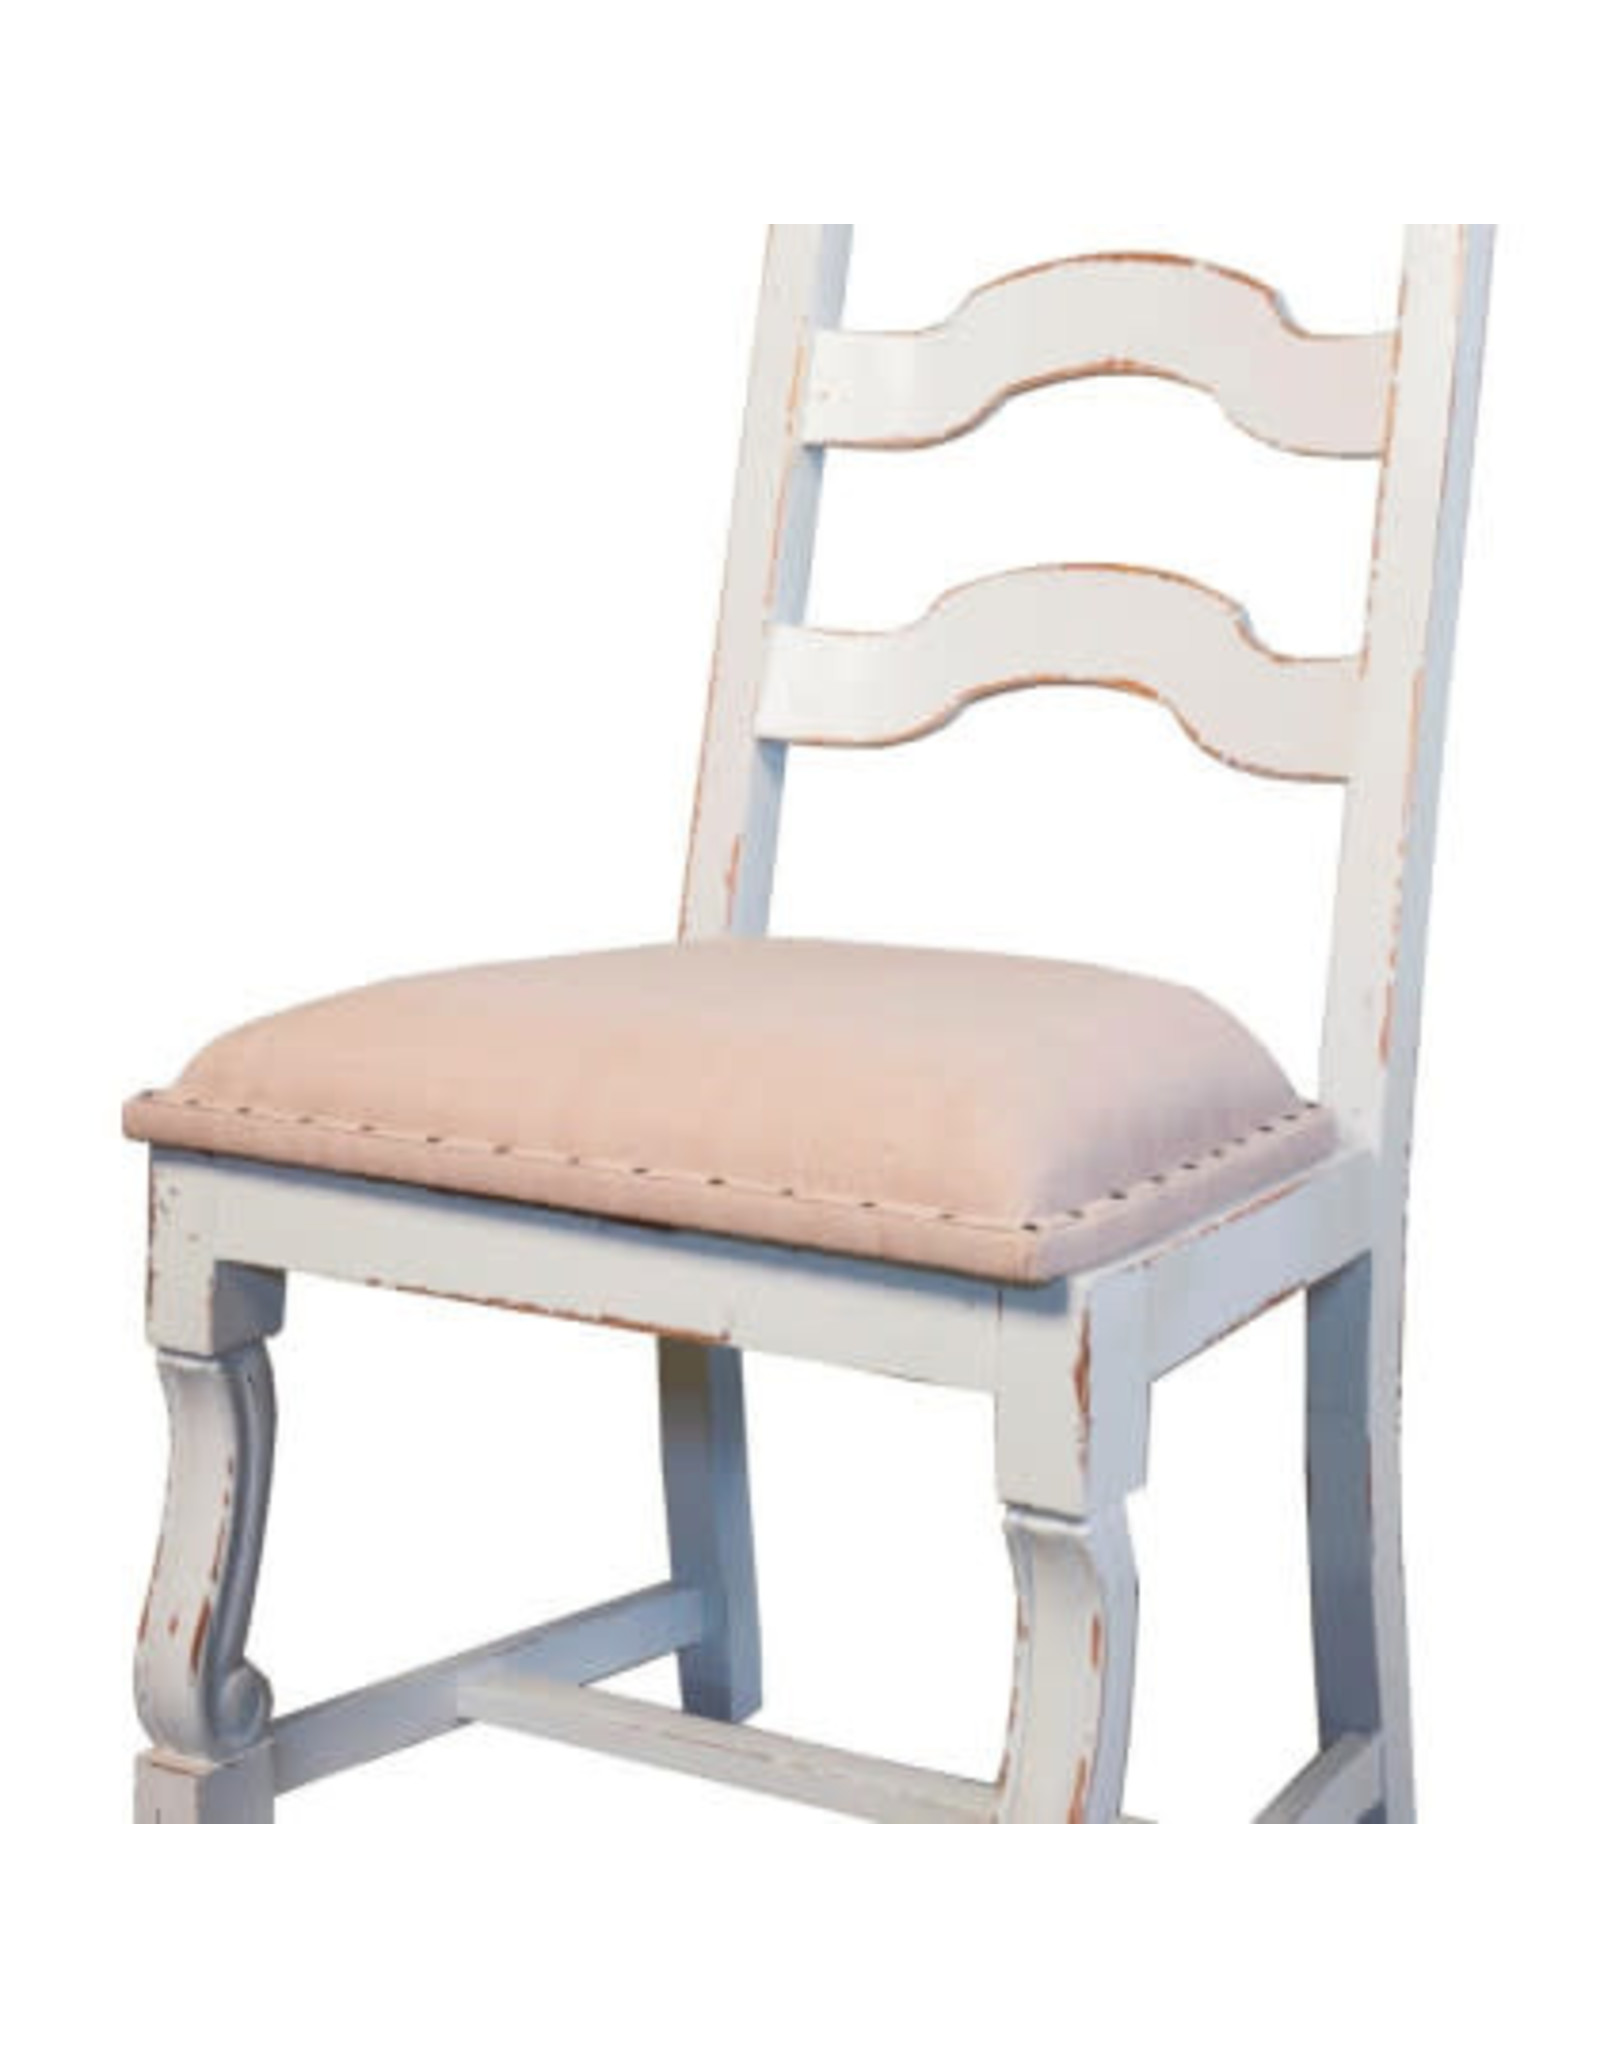 CHA021 Trestle Side Chair 22.5x25.4x47.4"H